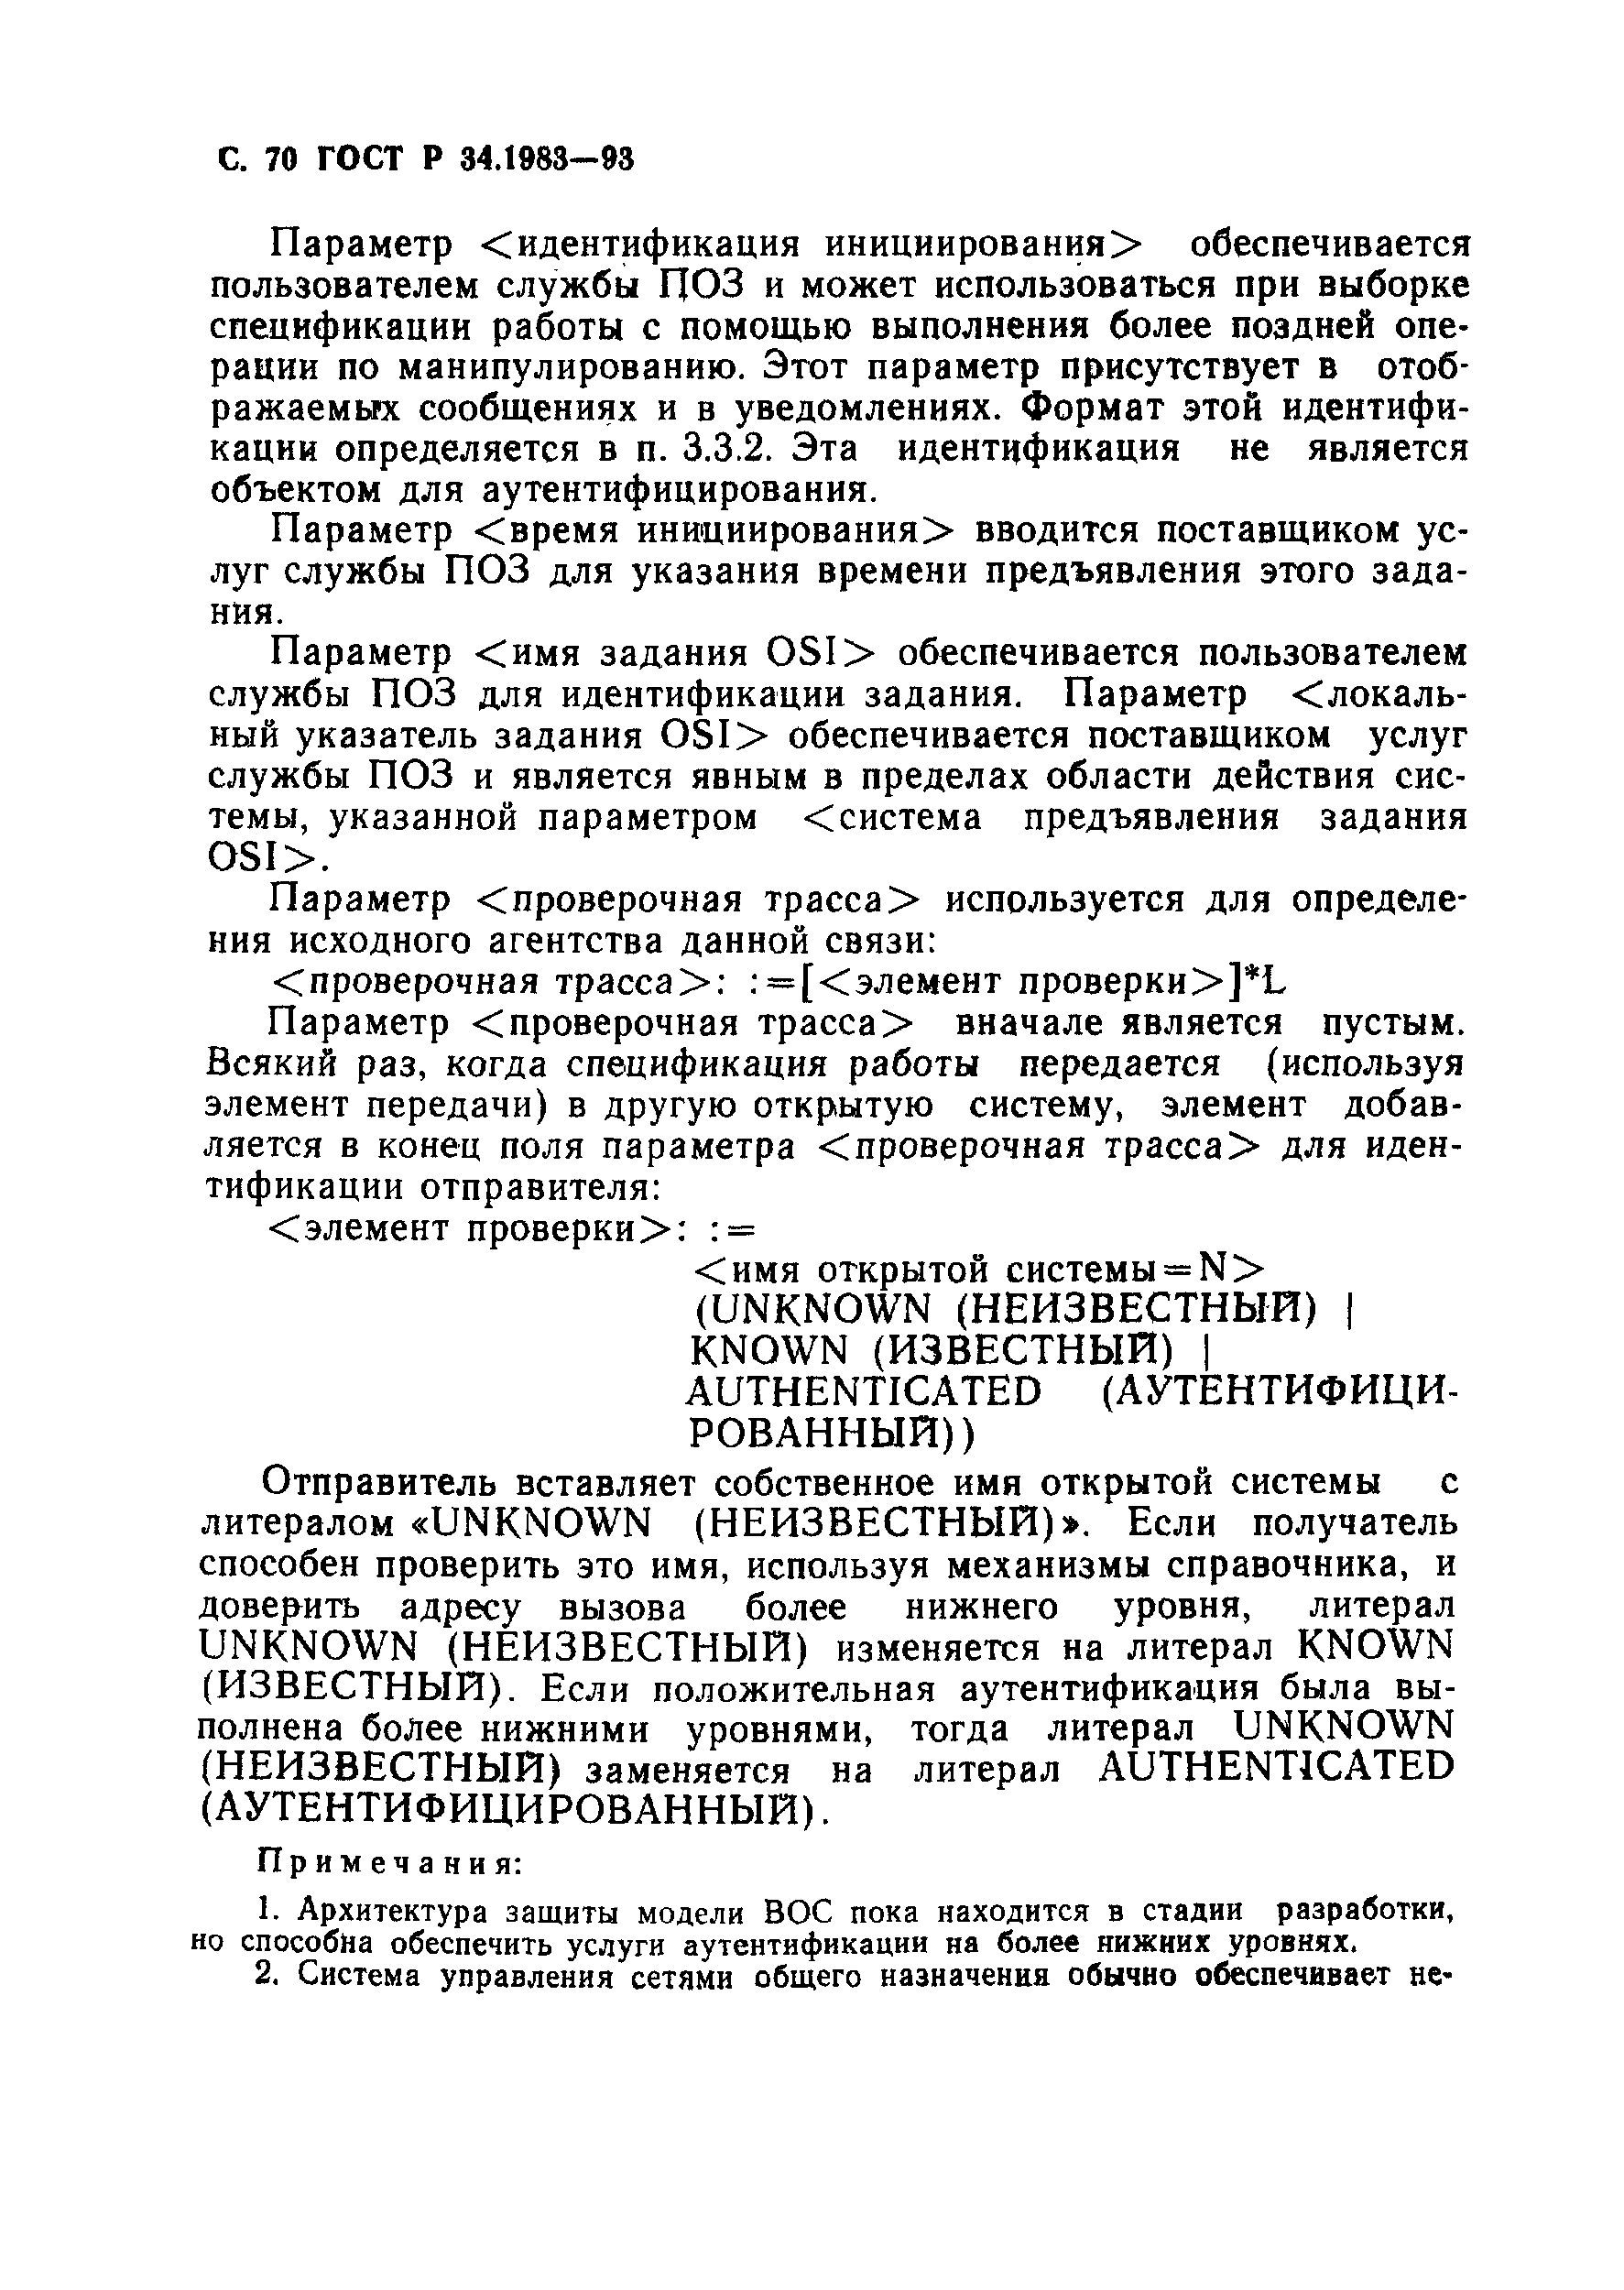 ГОСТ Р 34.1983-93. Страница 71